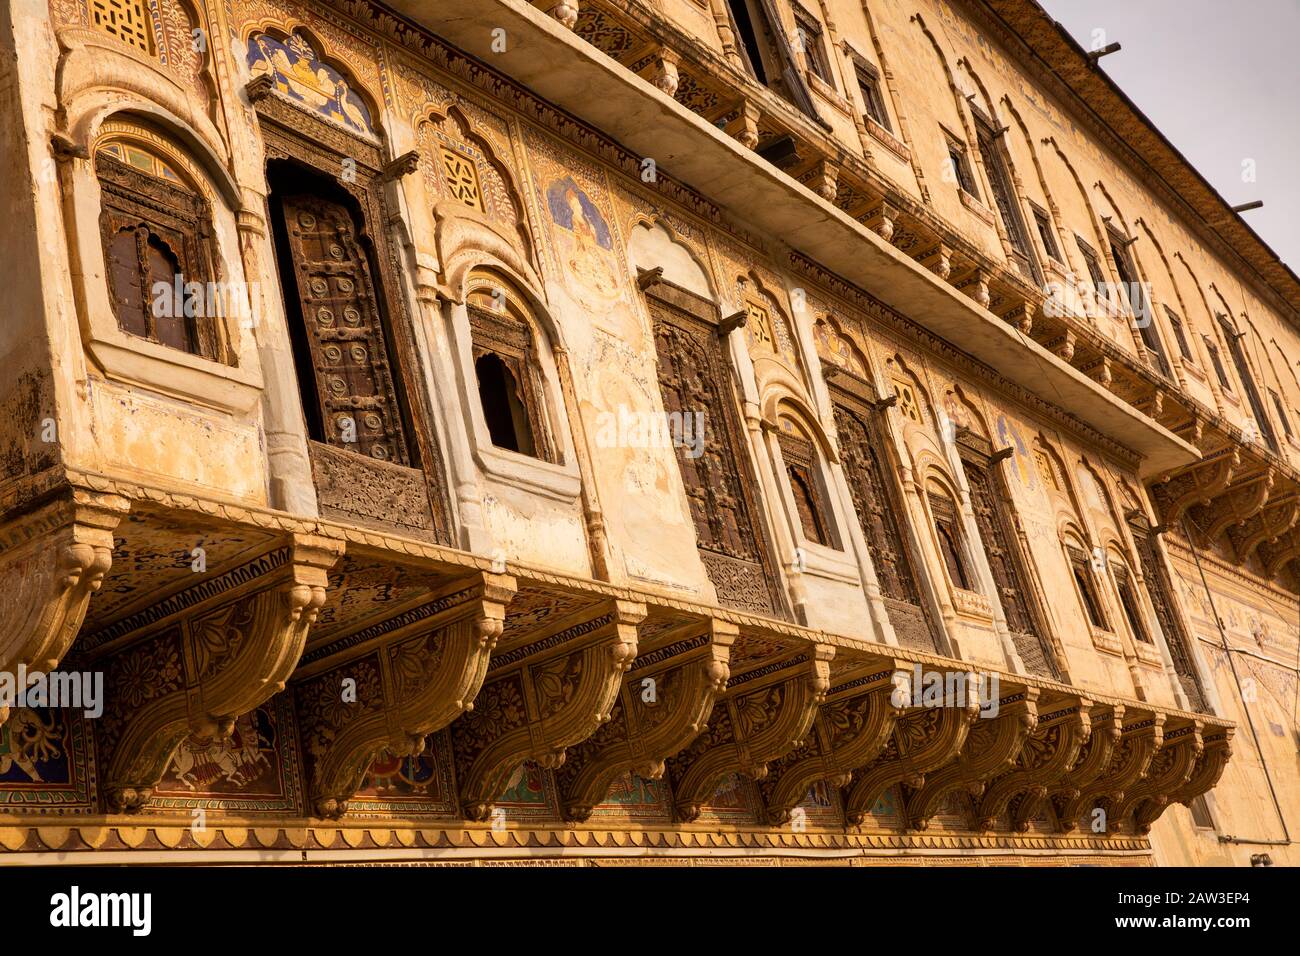 India, Rajasthan, Shekhawati, Mandawa, decorated haveli, jettied upper floor with wooden window shutters Stock Photo